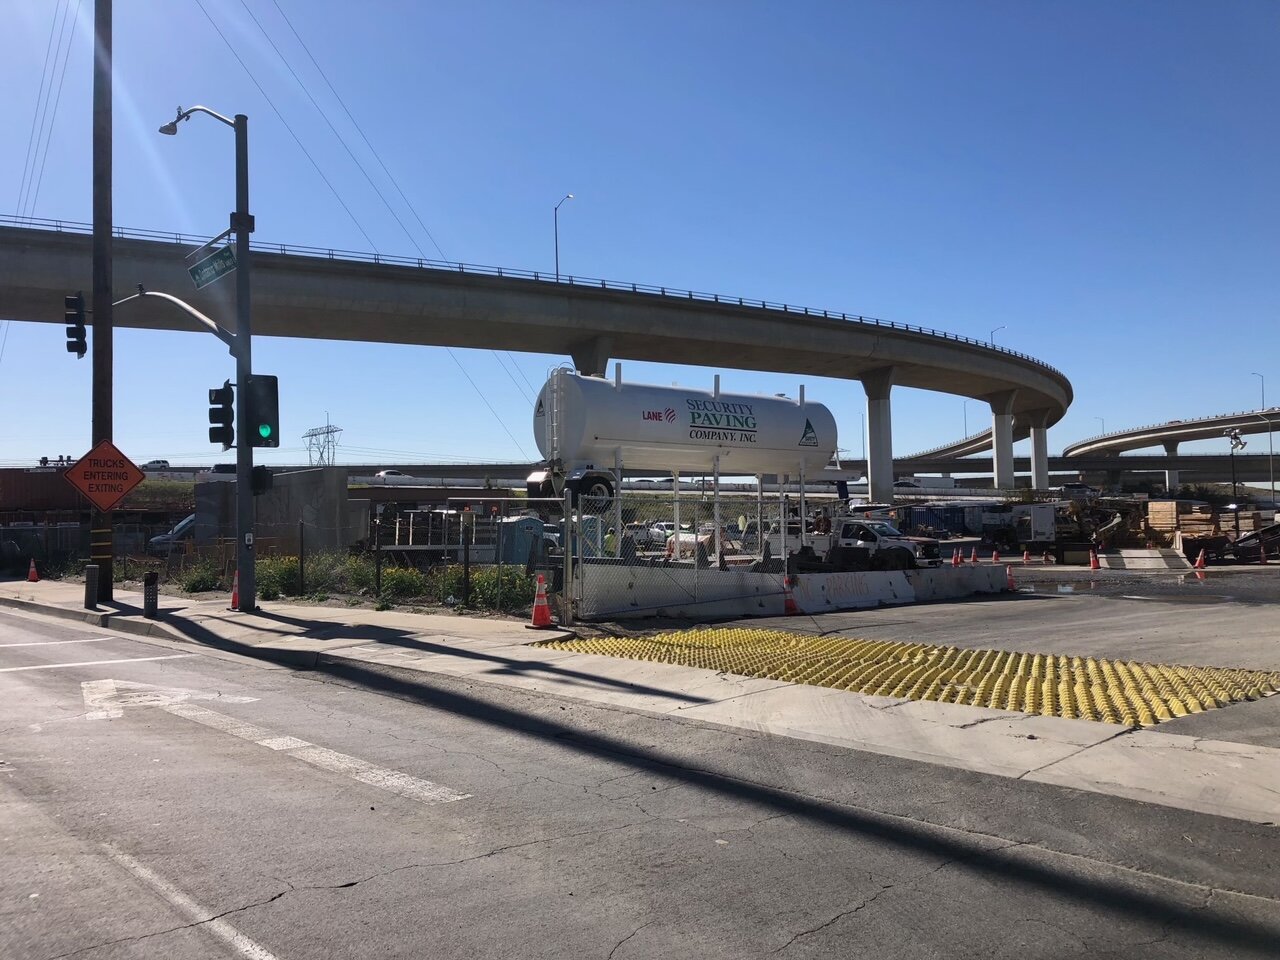 California-CalTrans-Project-Using-FODS-Reusable-Construction-Entrance-Mats-BPM-To-Reduce-Vehicle-Trackout-TC-1-BMP-Construction-Entrance-Exit.jpg